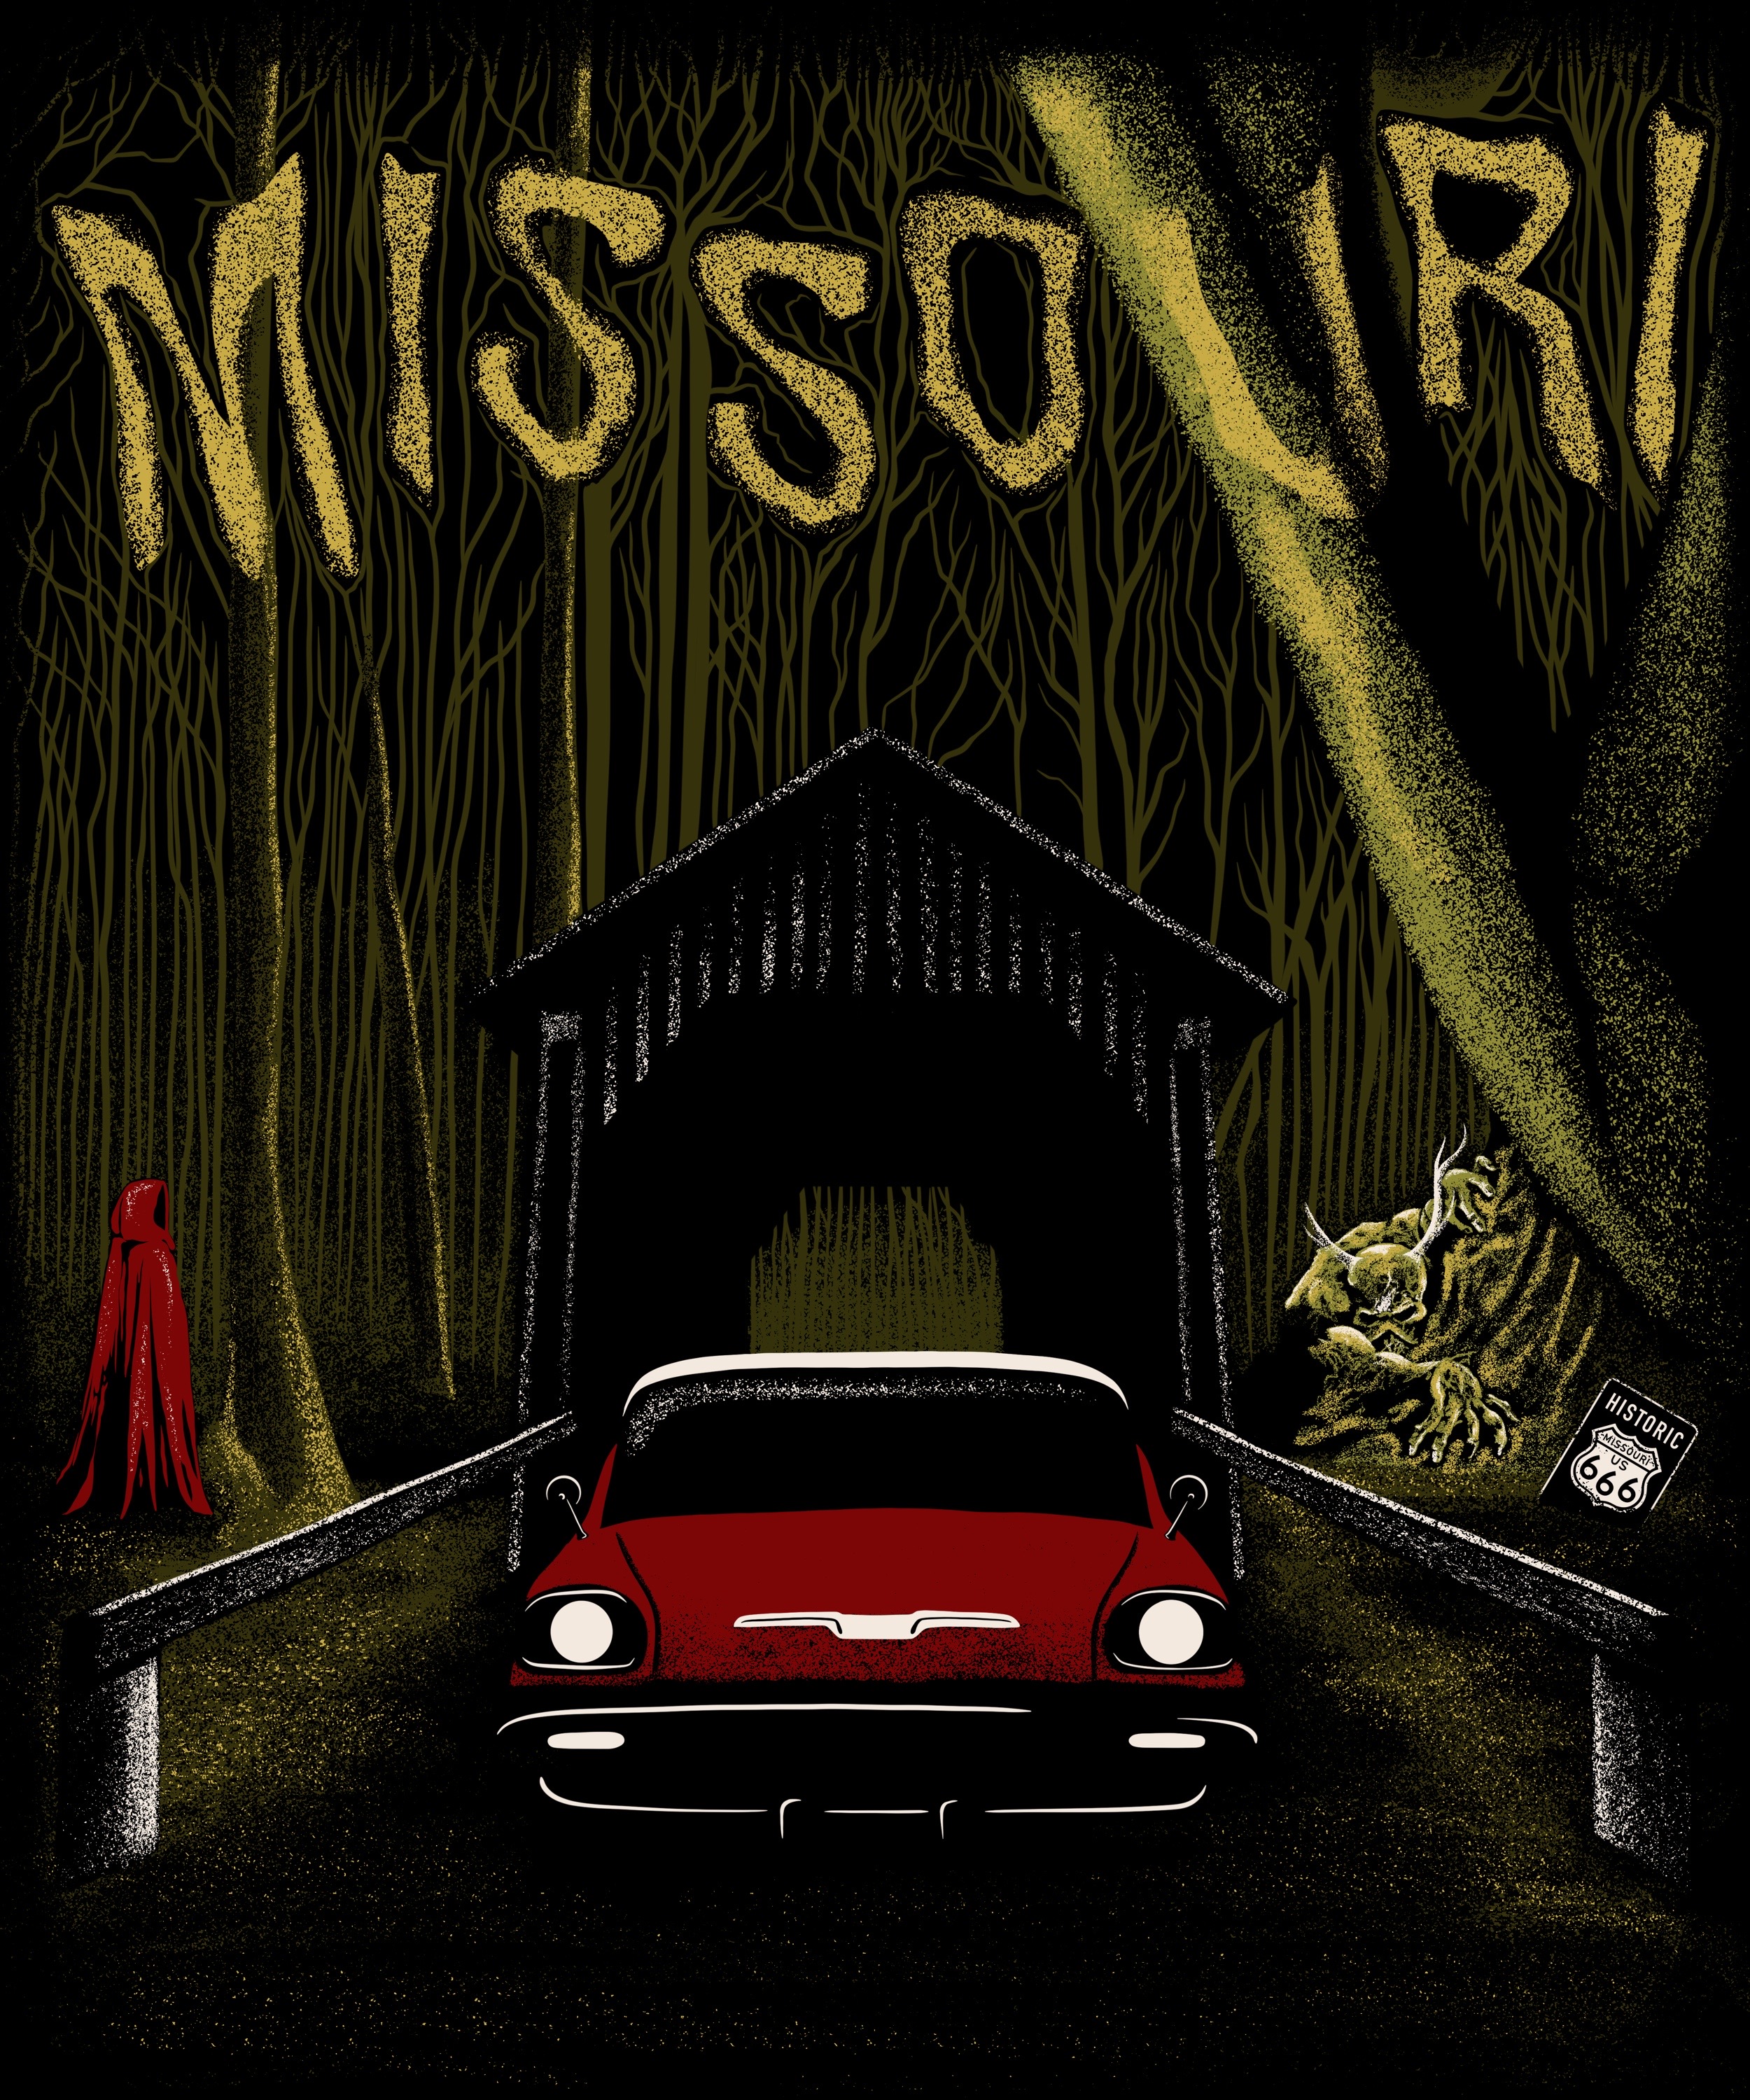 Route 666 travels through Missouri 